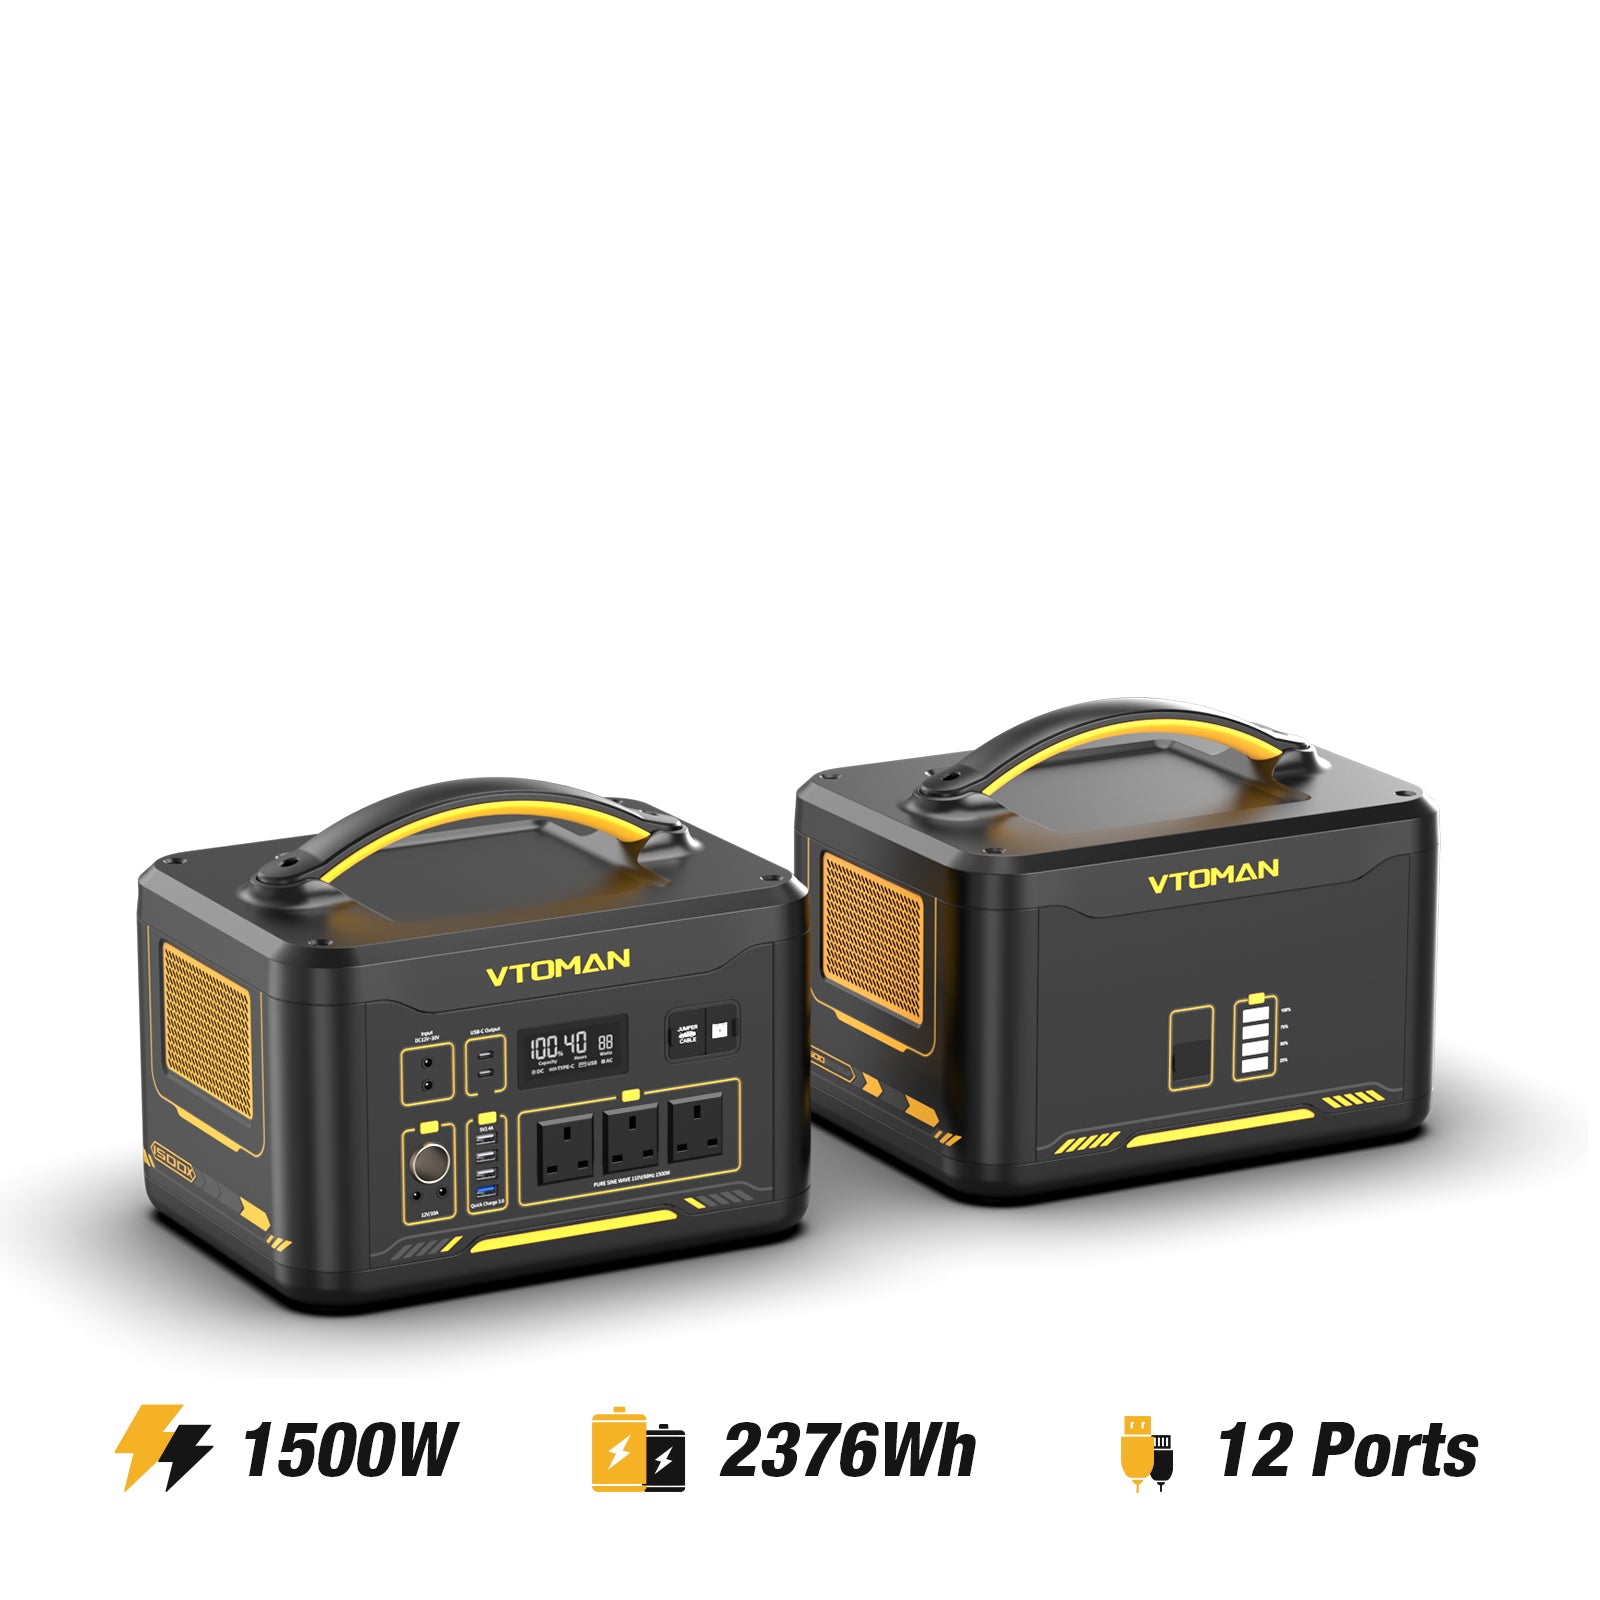 VTOMAN Jump 1500 Extra Battery